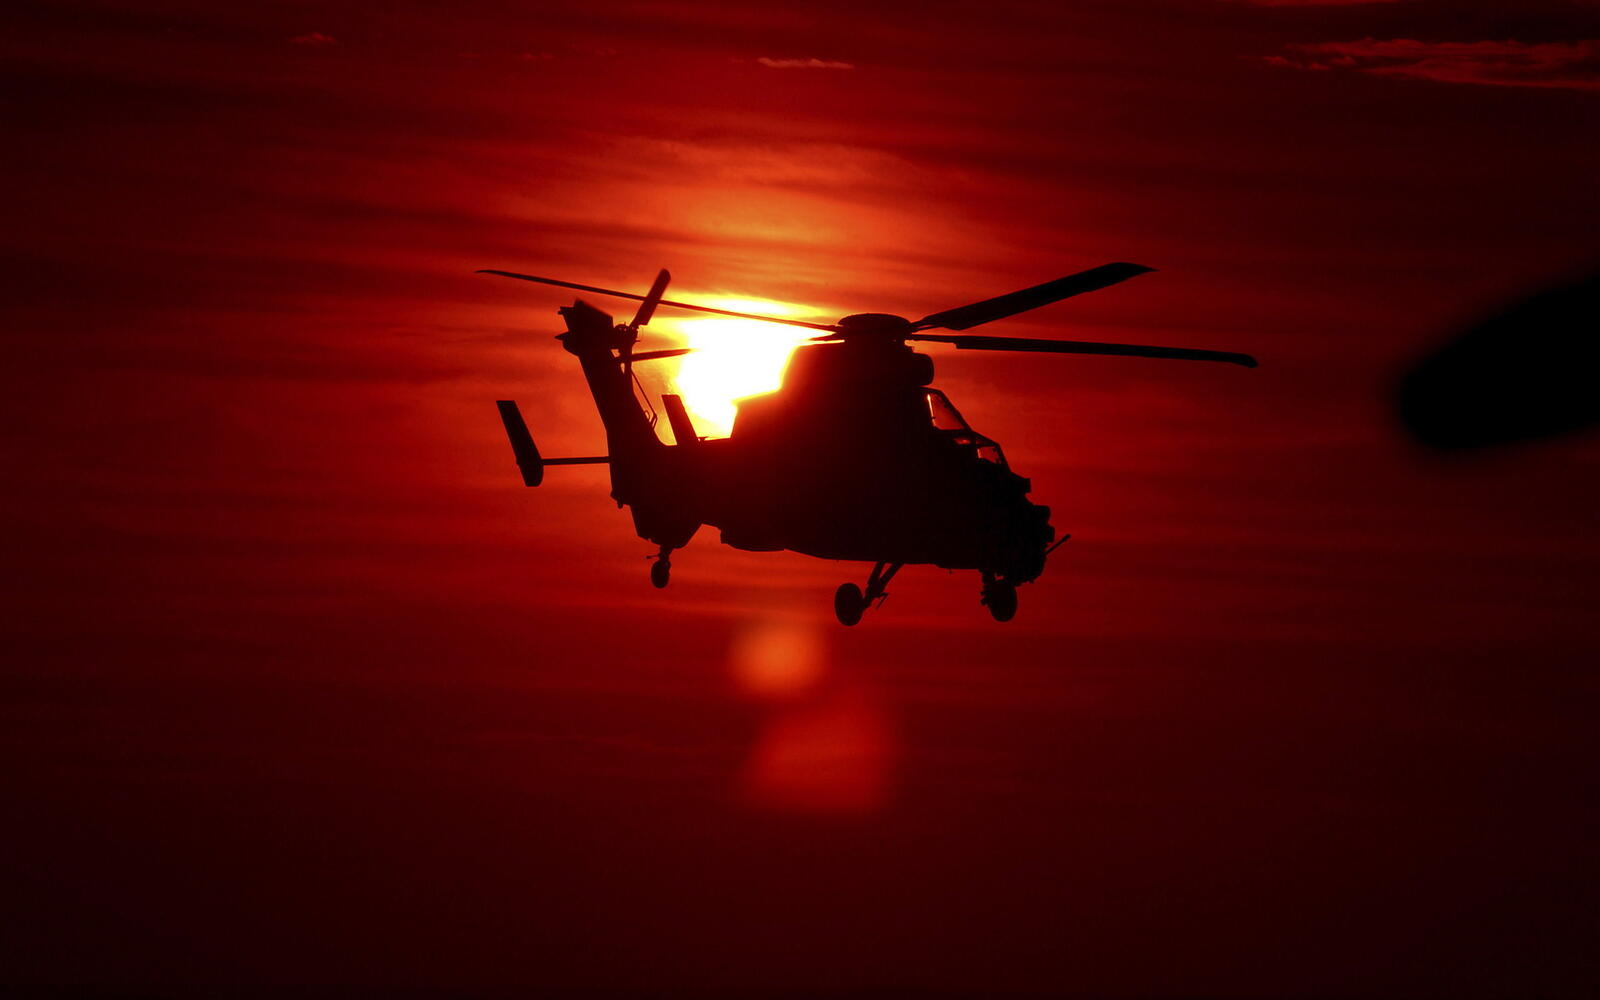 Обои вертолет закат солнце на рабочий стол